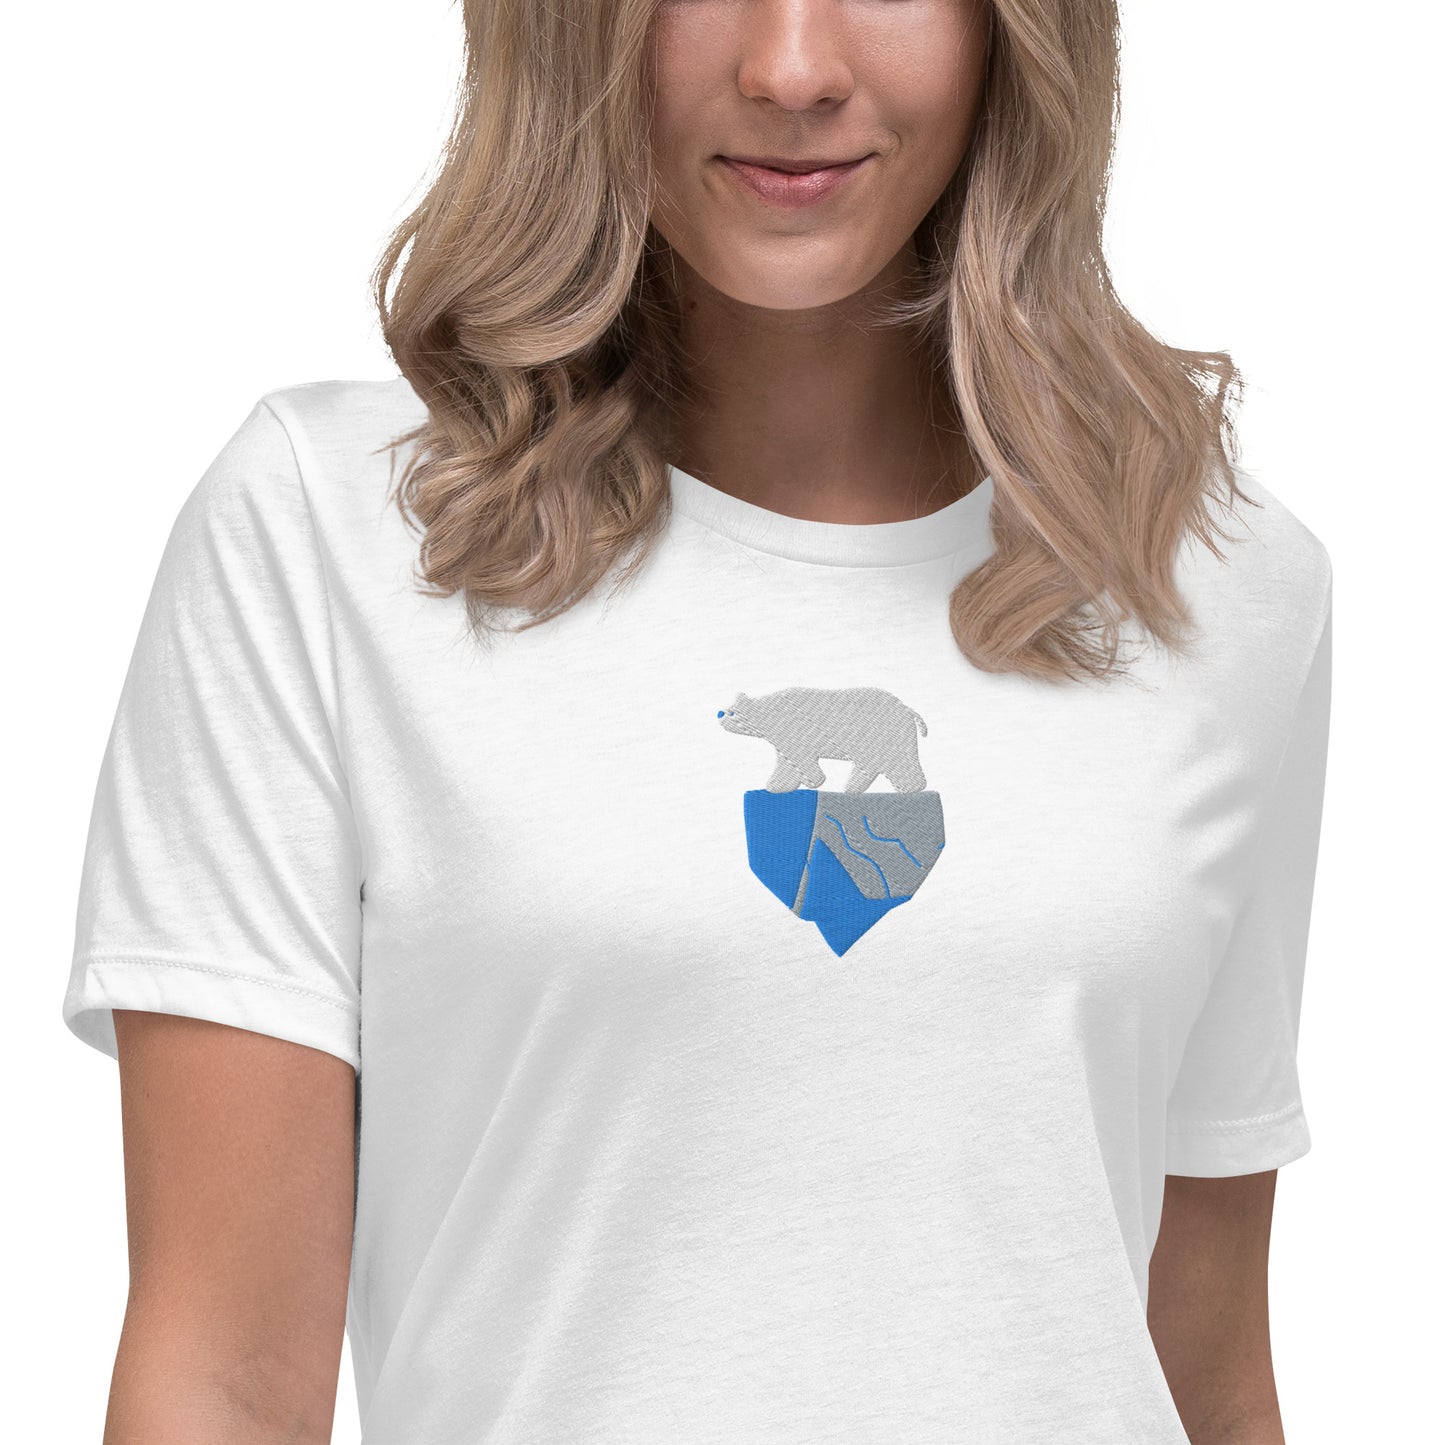 Camiseta bordada de oso polar mujer